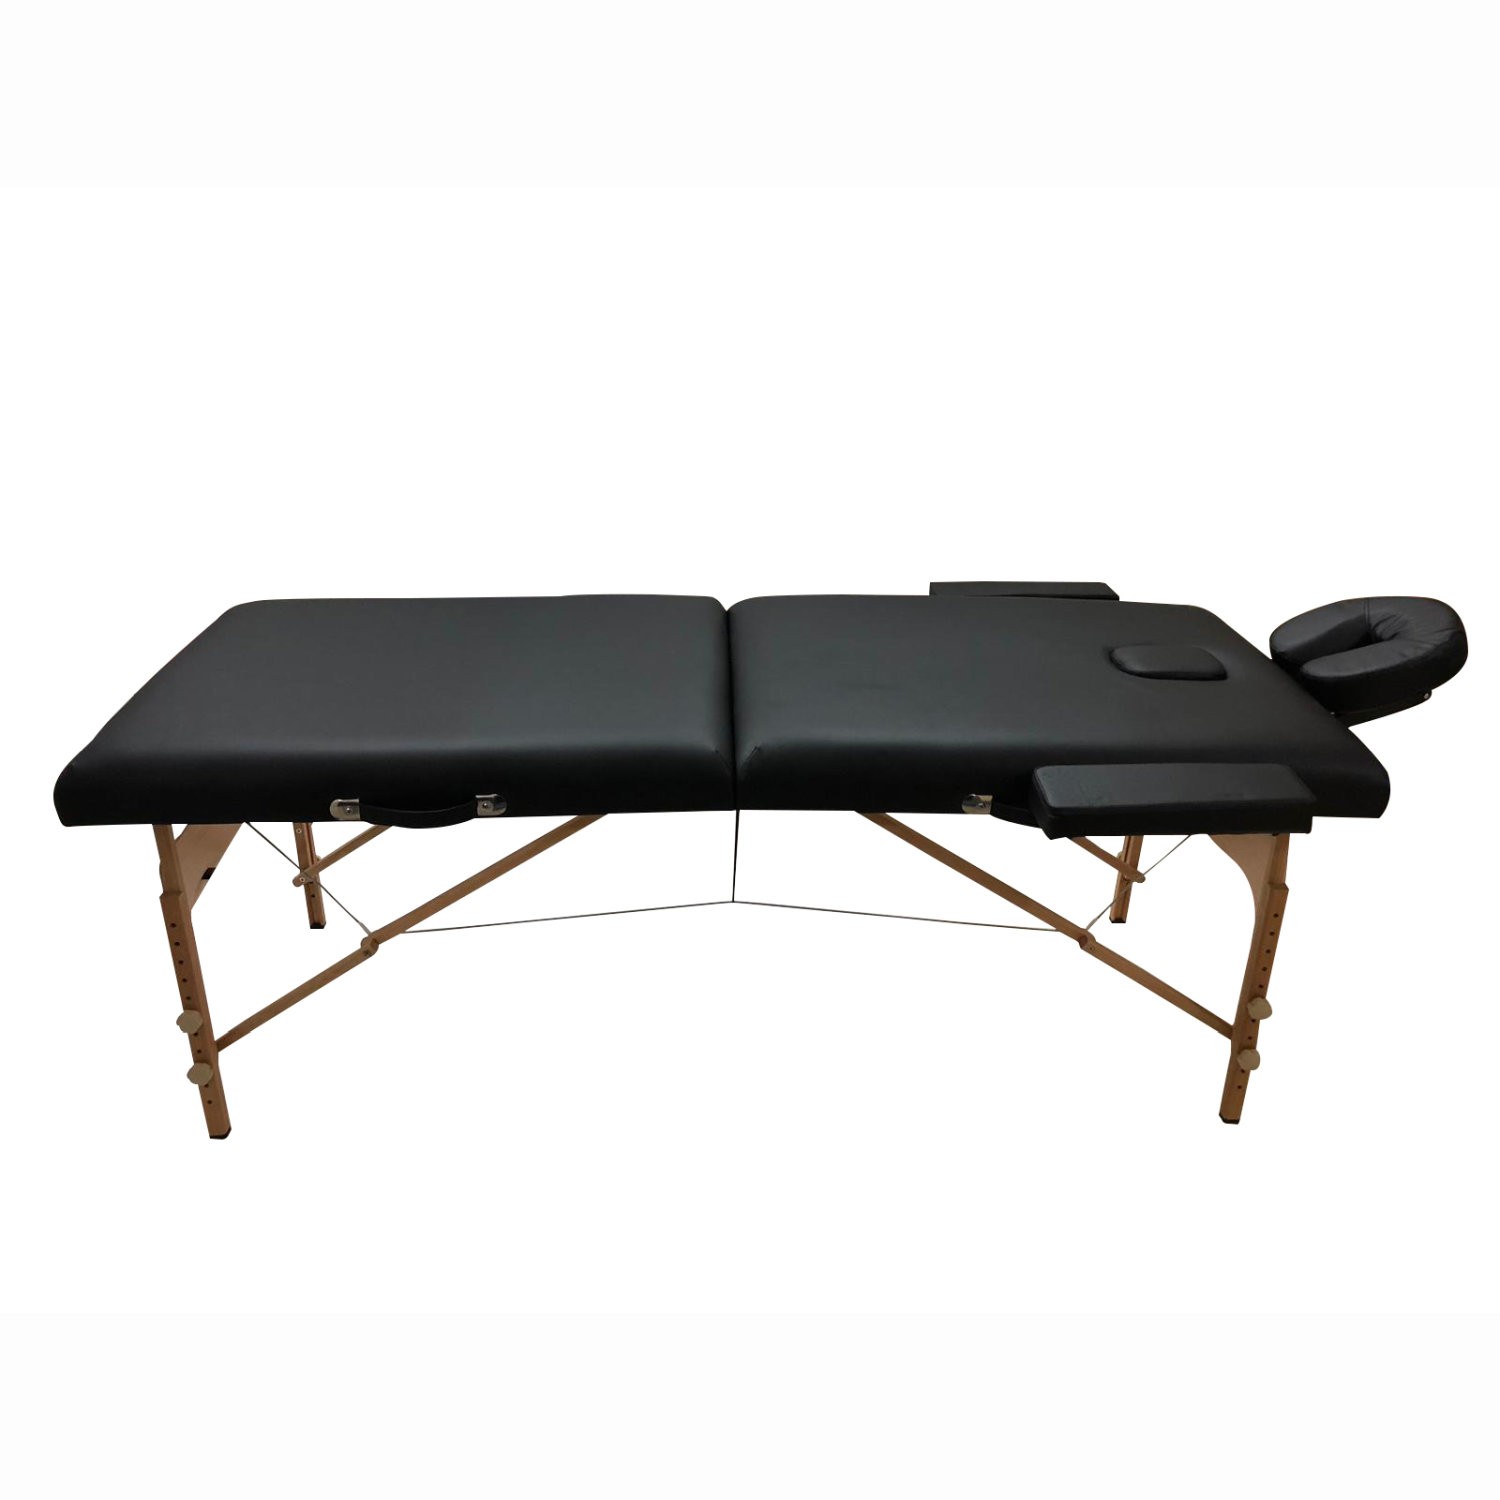 Comfort Plus Ahşap Katlanır Masaj Masası İthal 201 - 201-Siyah